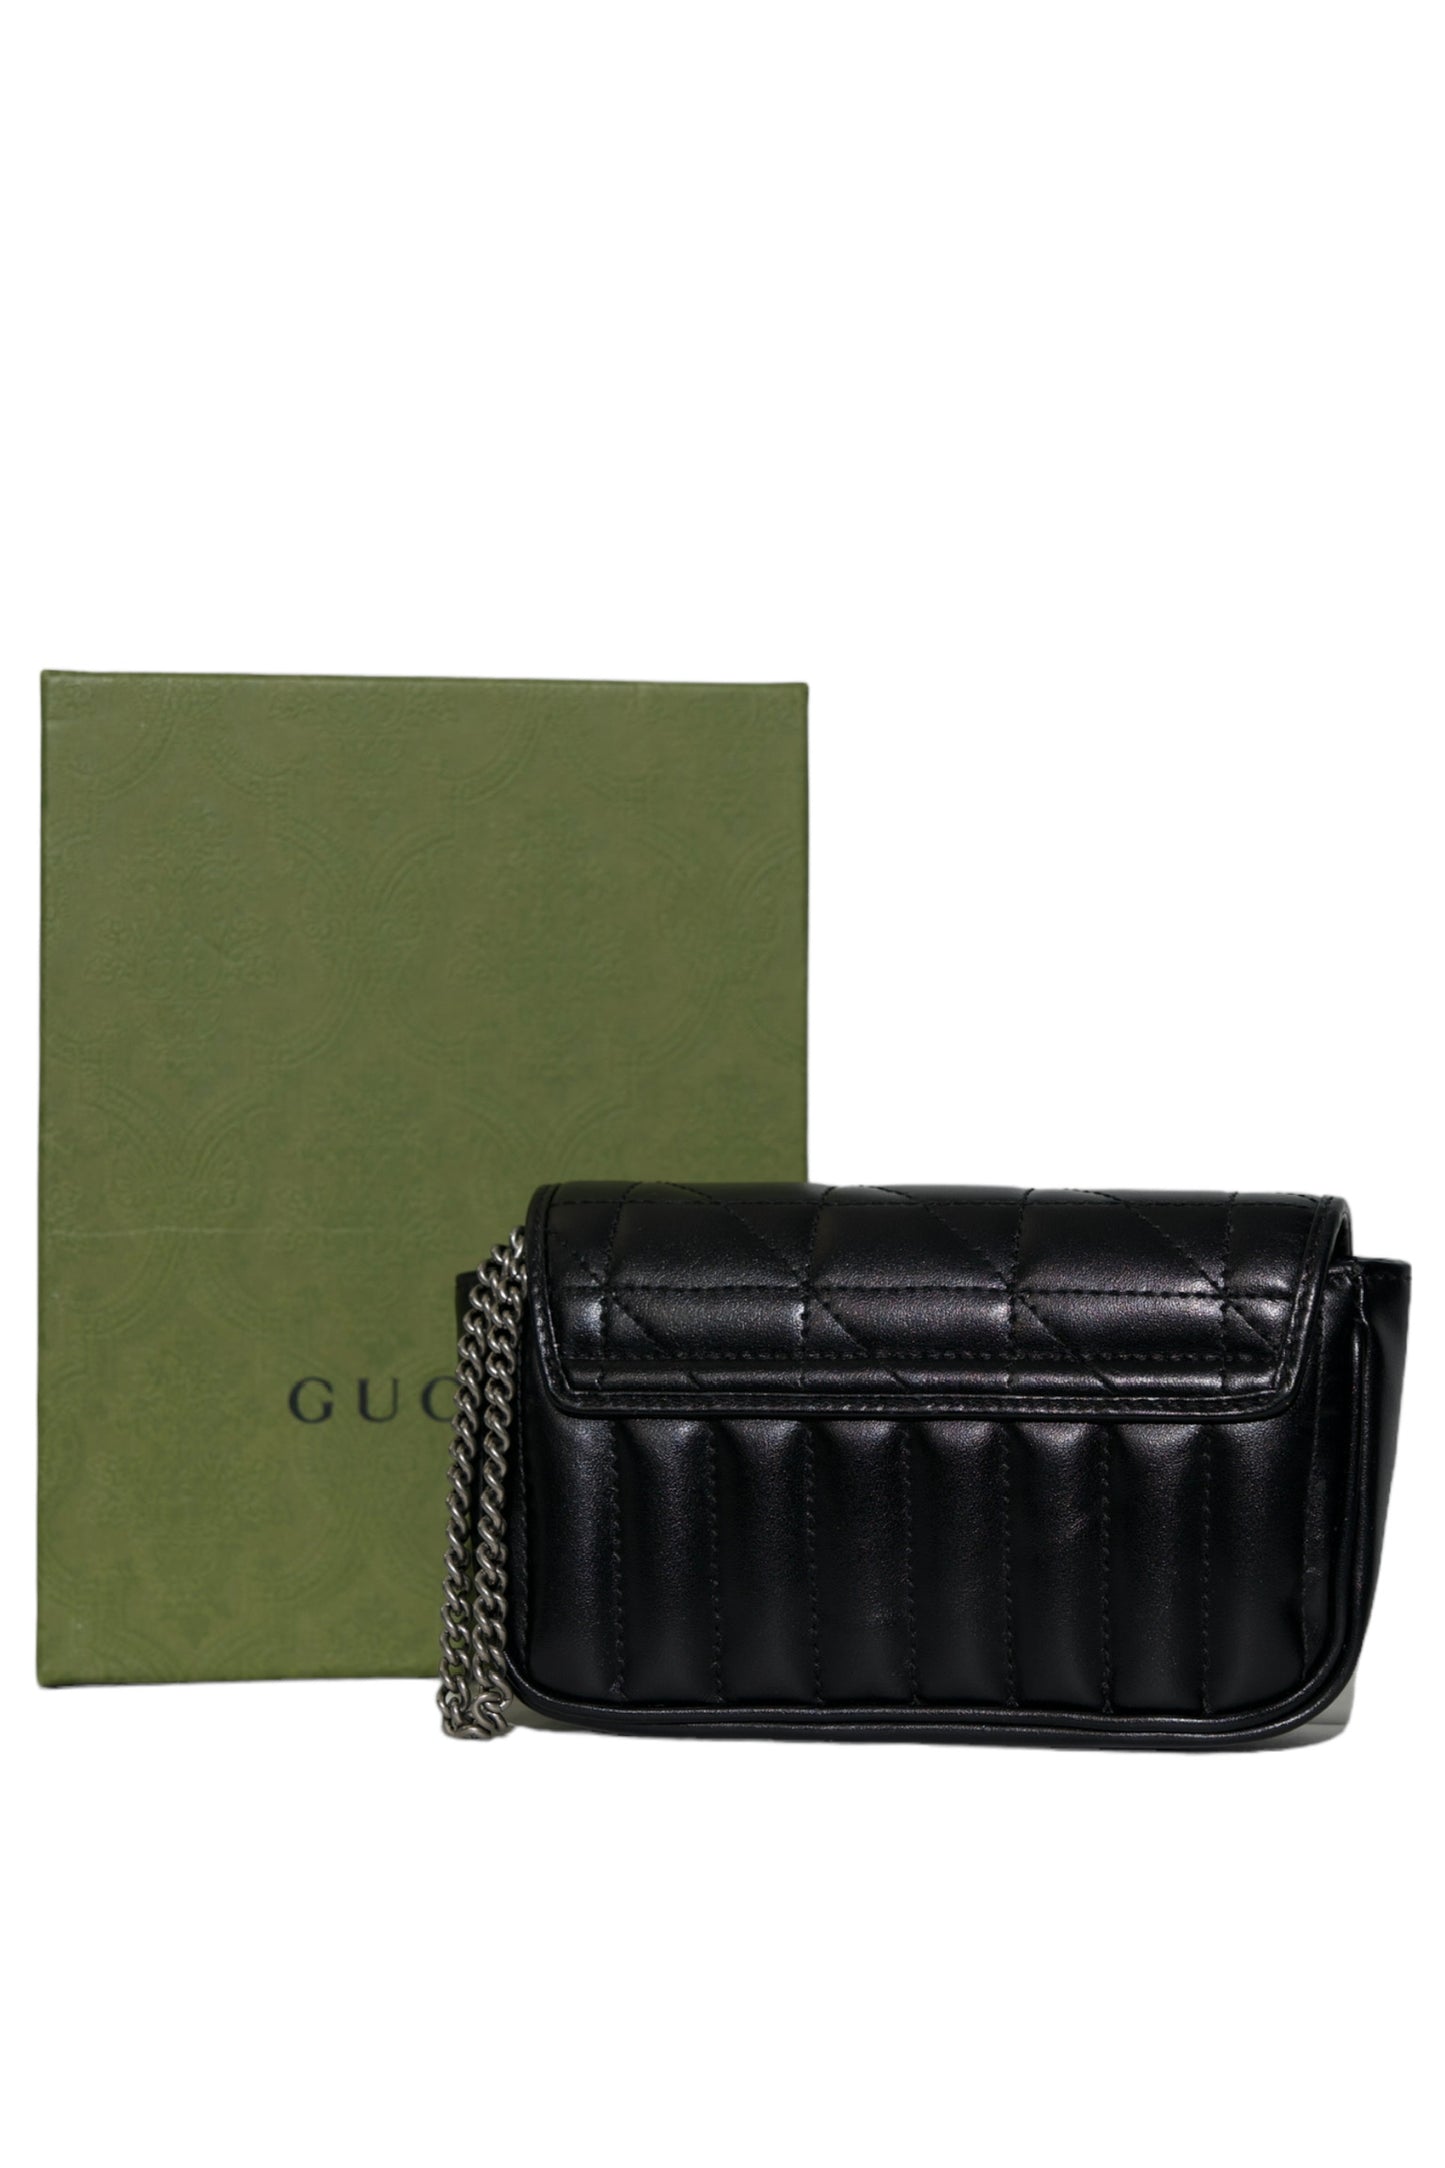 GUCCI -  Black GG Marmont Chain Shoulder Bag